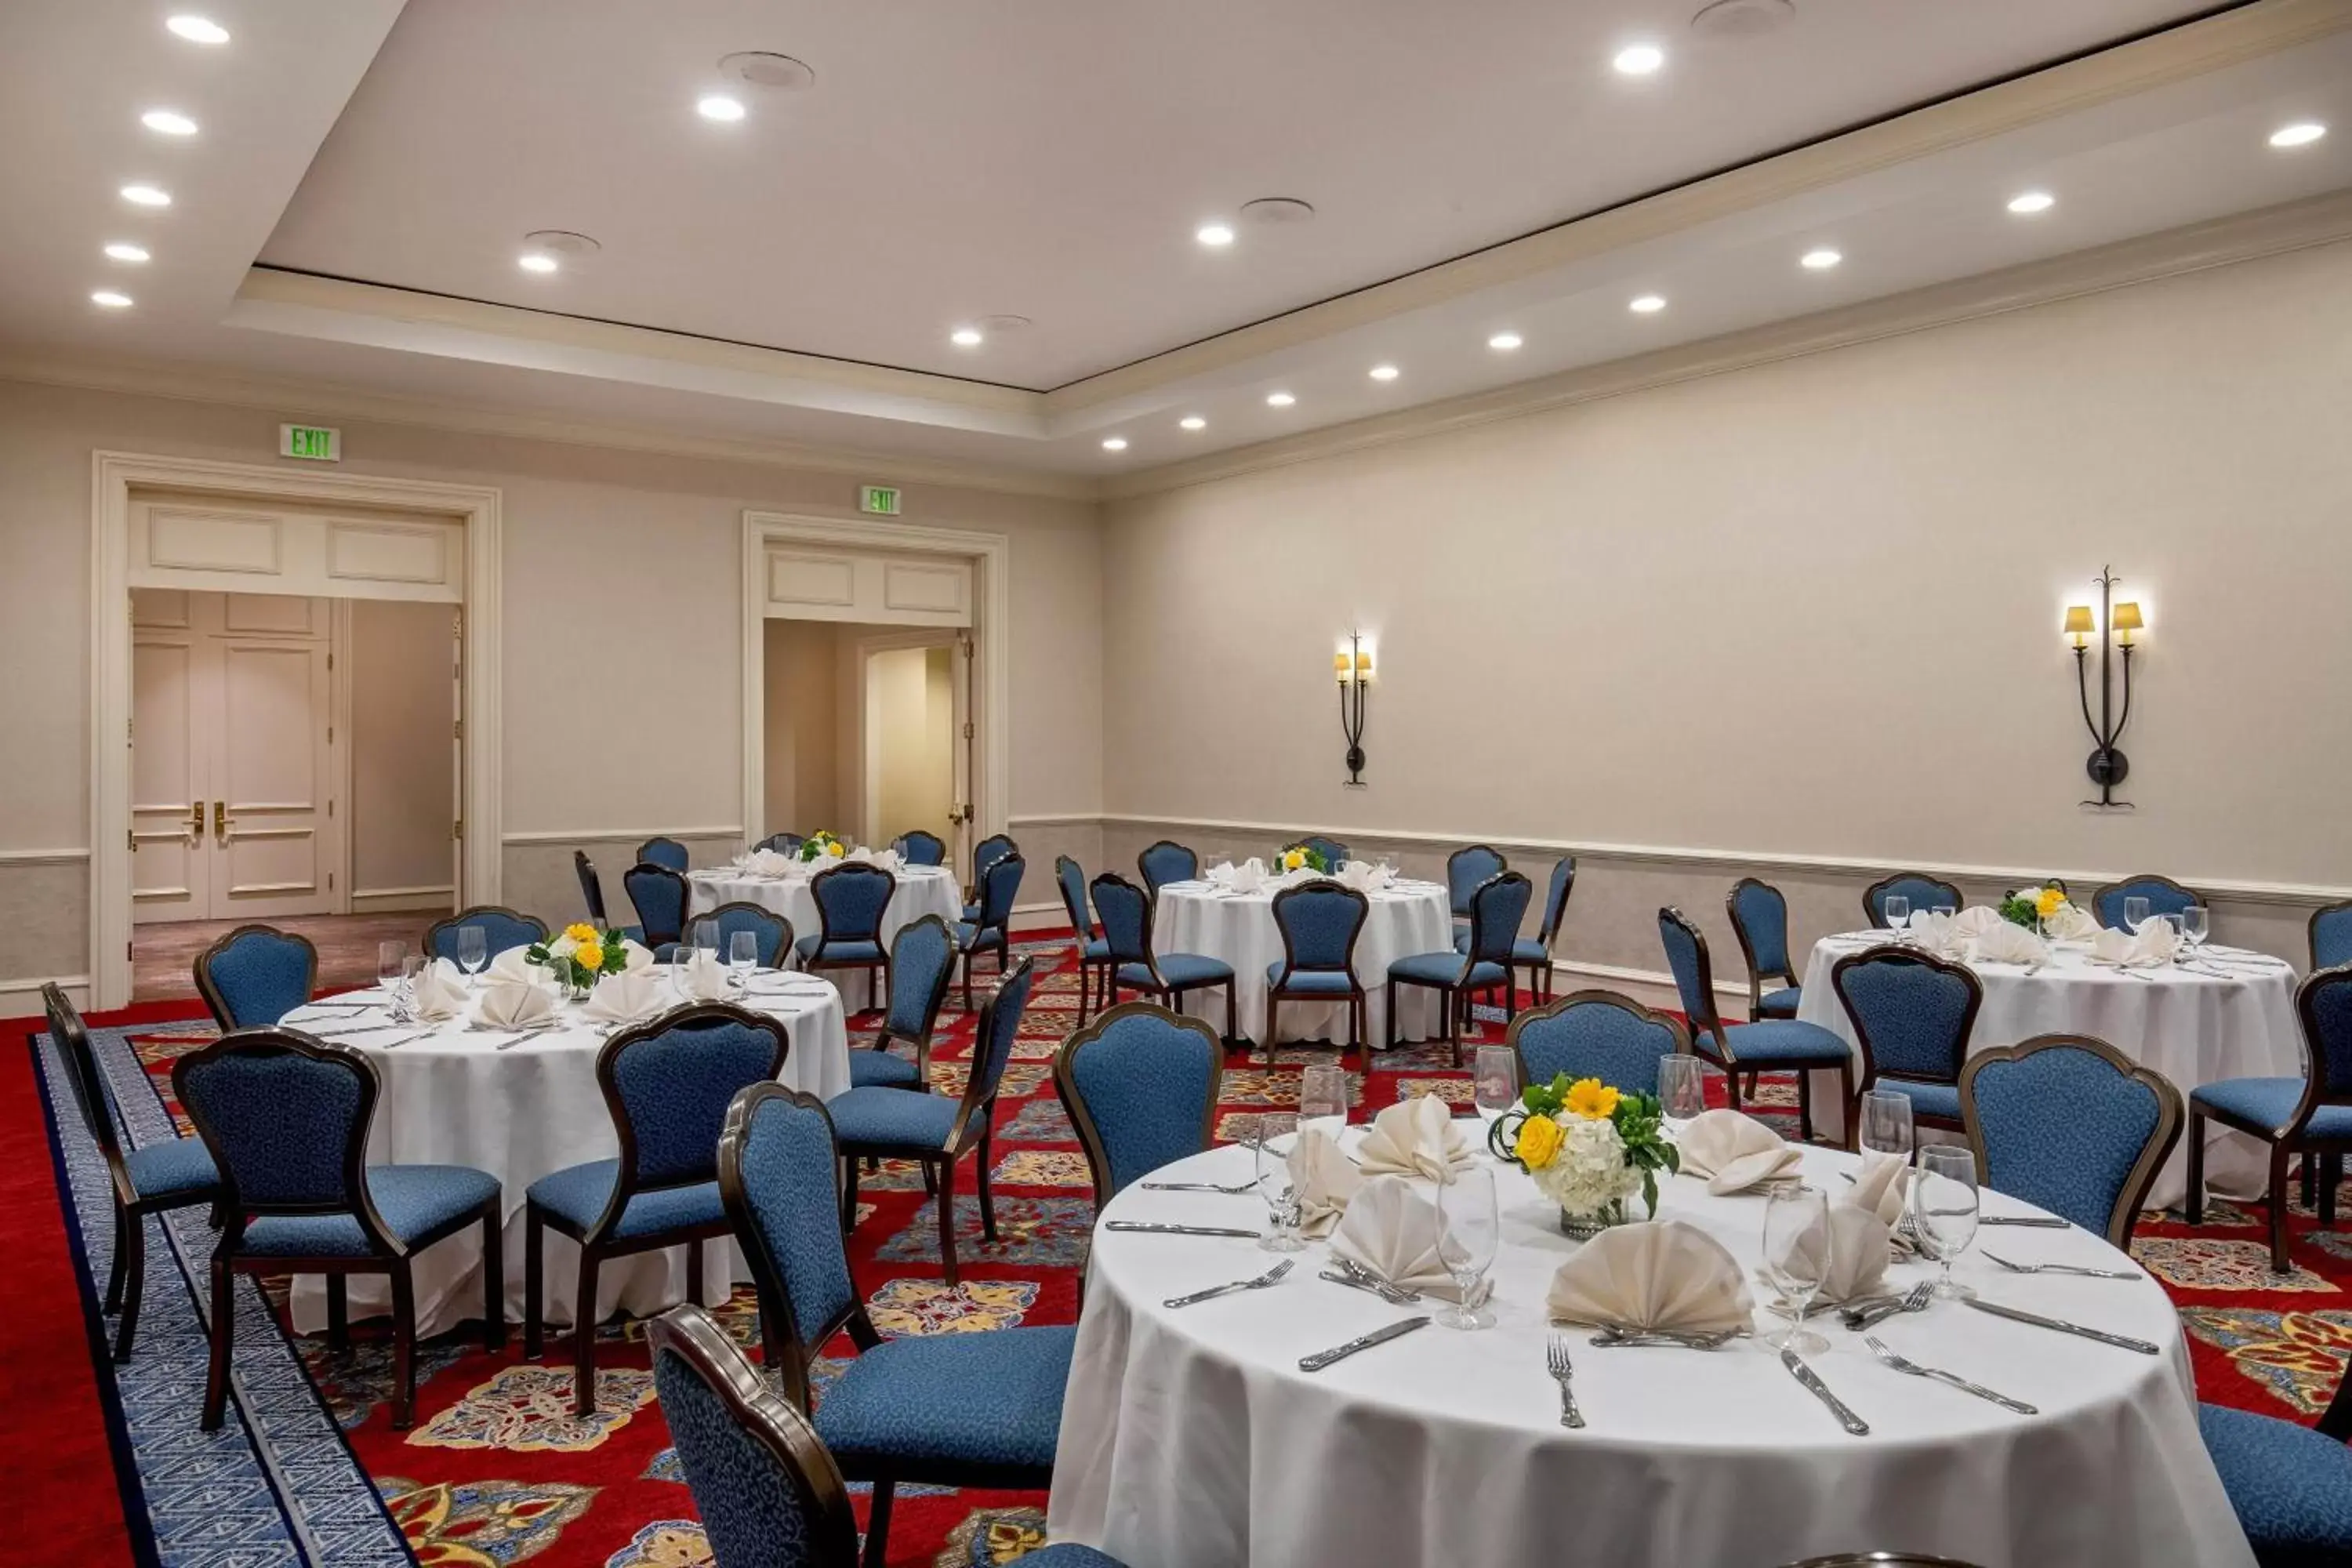 Meeting/conference room, Banquet Facilities in The Westin Riverwalk, San Antonio